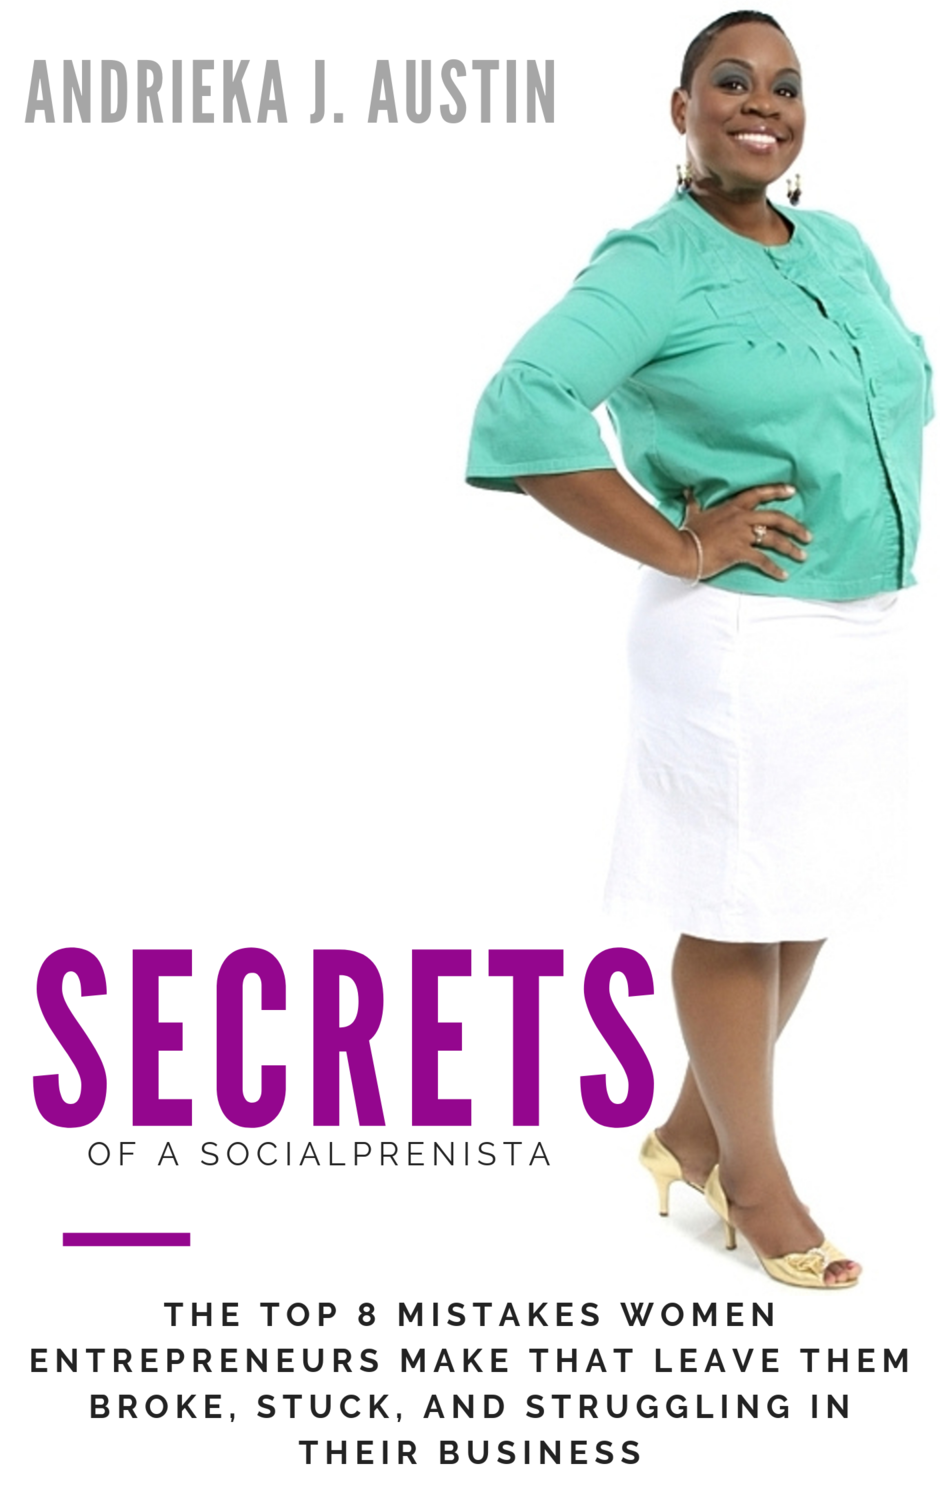 Secrets of A Socialprenista [BOOK + E-Book + E-Audio Book]